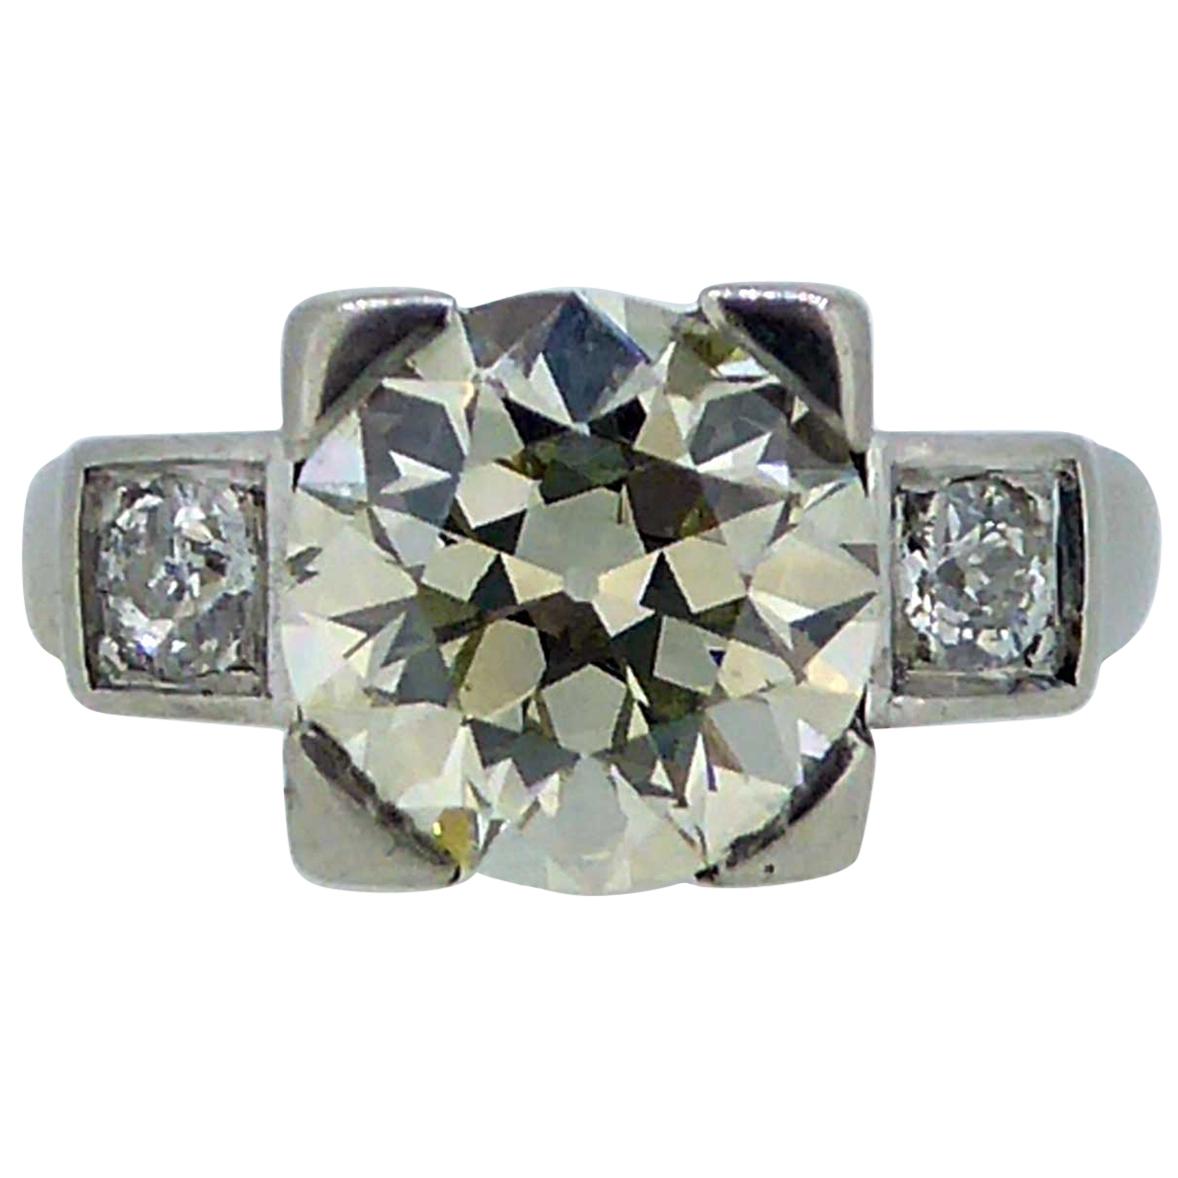 2.60 Carat Art Deco Diamond Ring, Early Brilliant/Old European Cut Diamonds